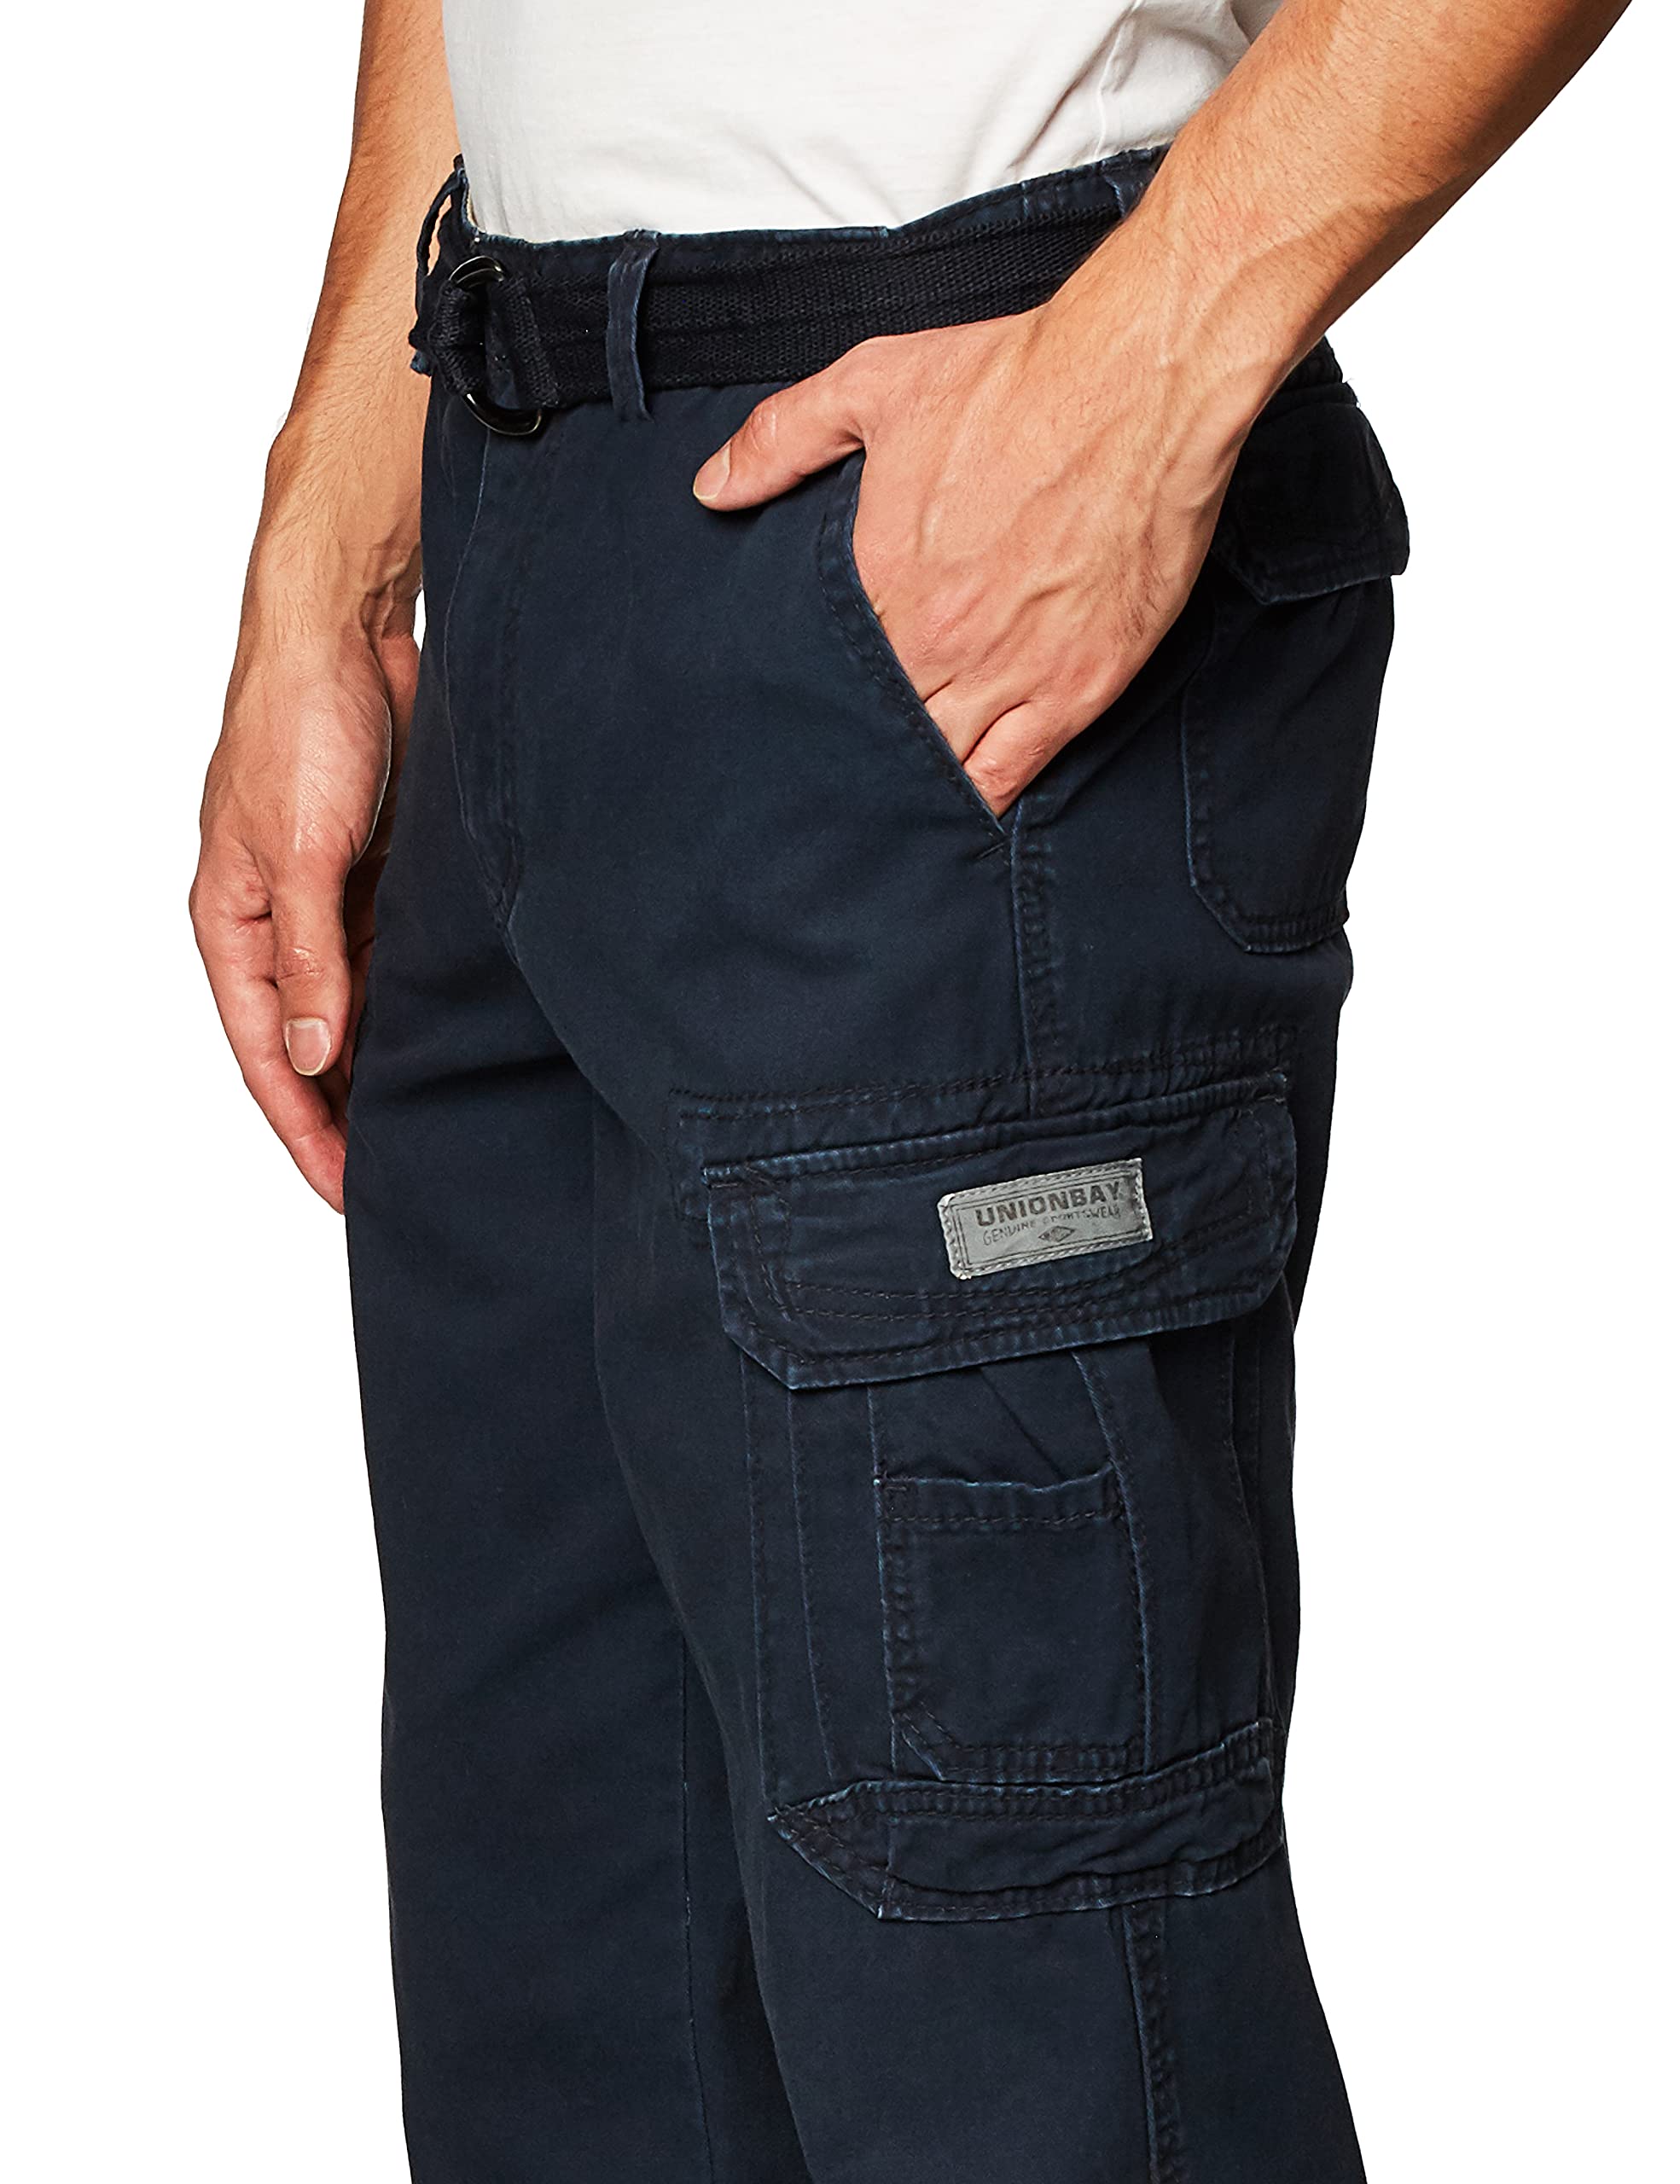 Union Bay Dexter Cargo Men's Shorts in Olive, Size 38 | C...